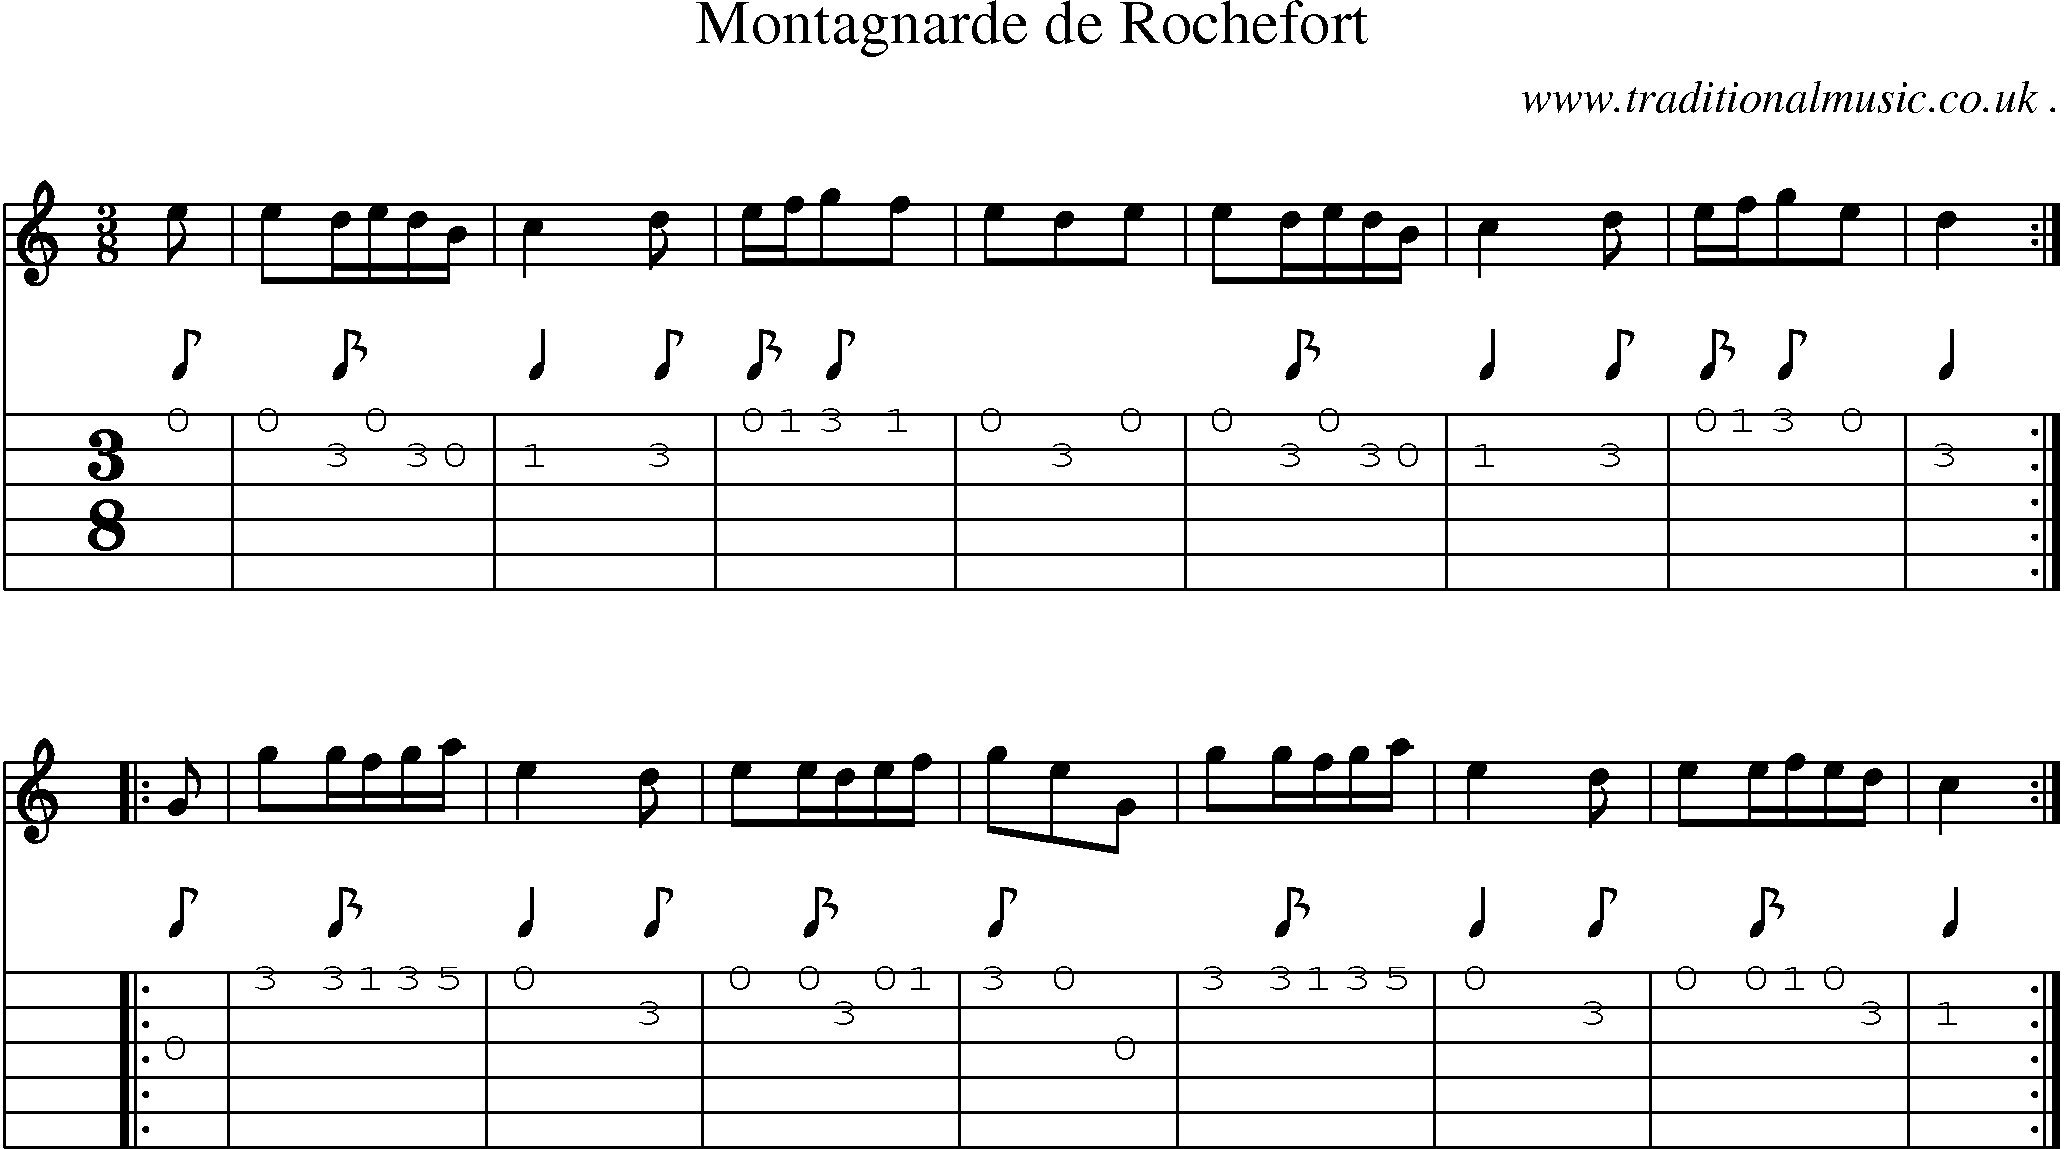 Sheet-Music and Guitar Tabs for Montagnarde De Rochefort